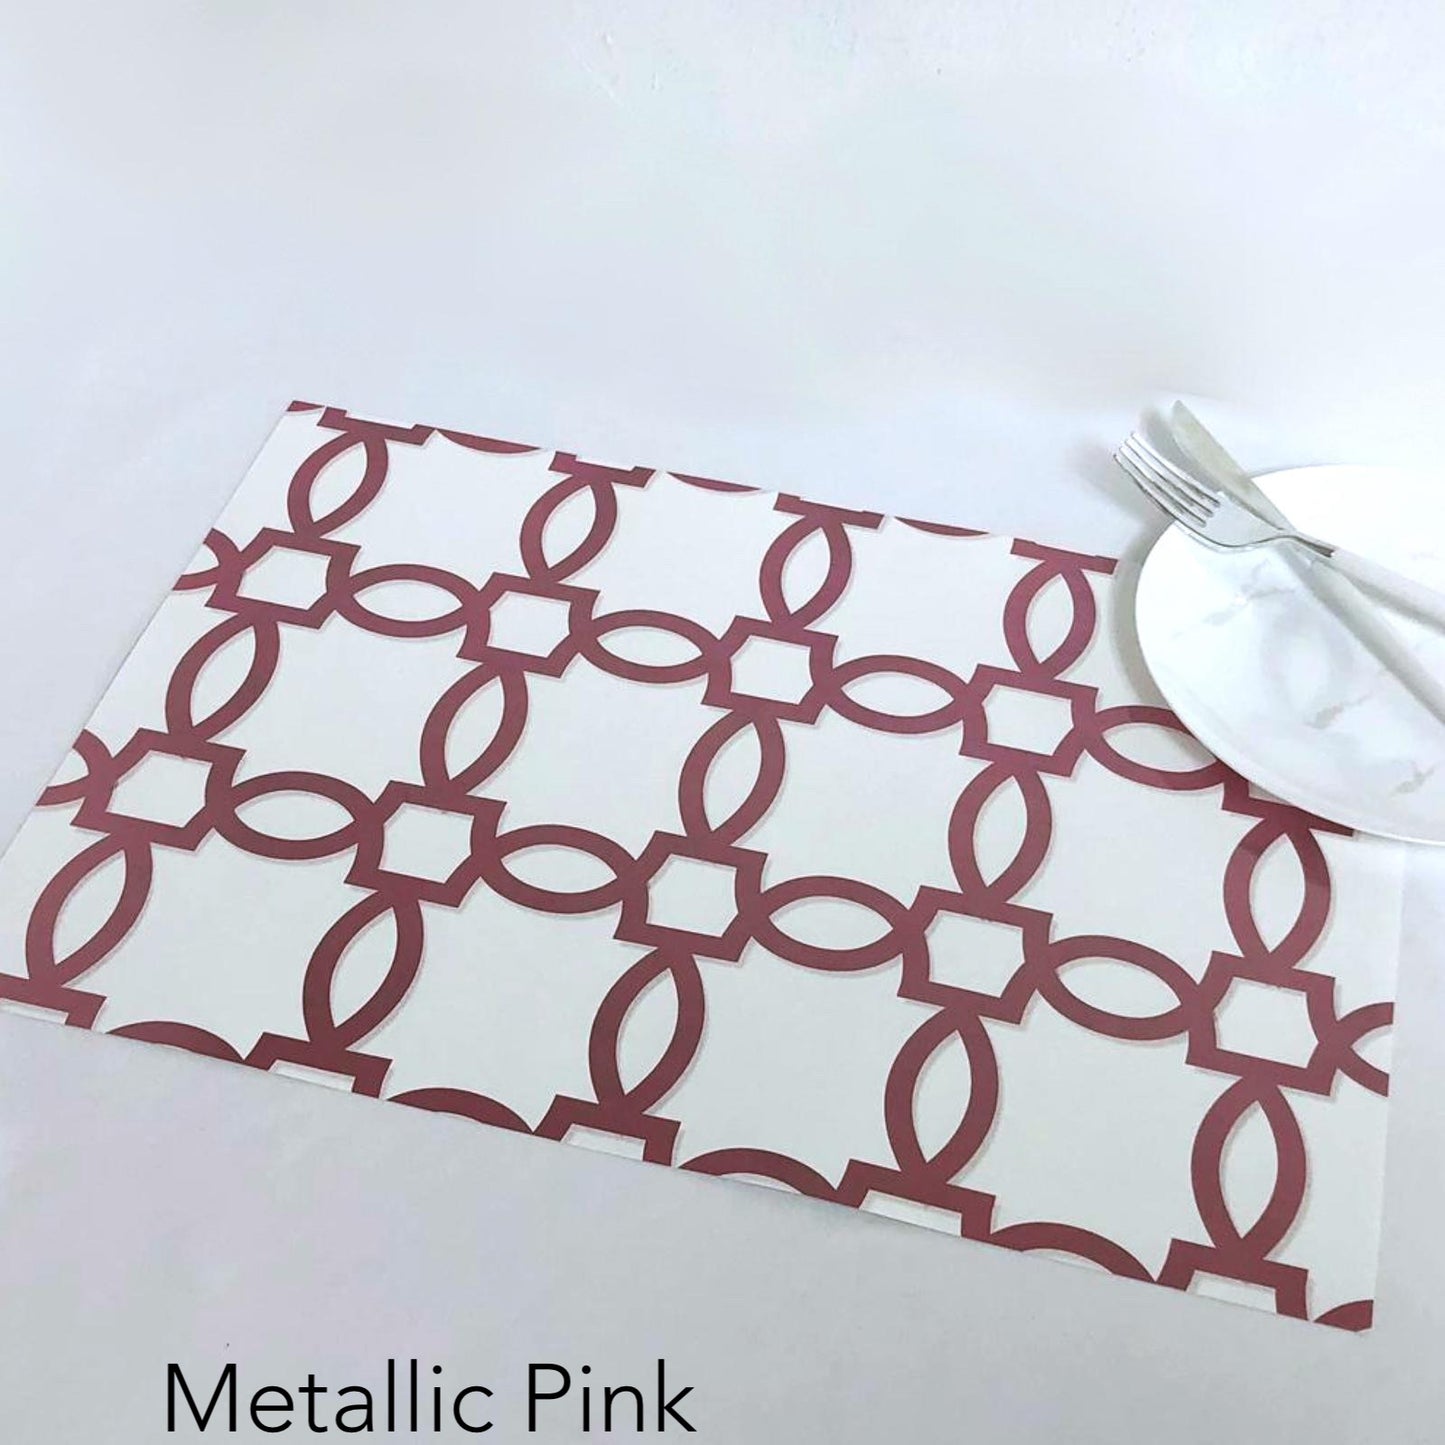 Foil Iron Links - Placemat